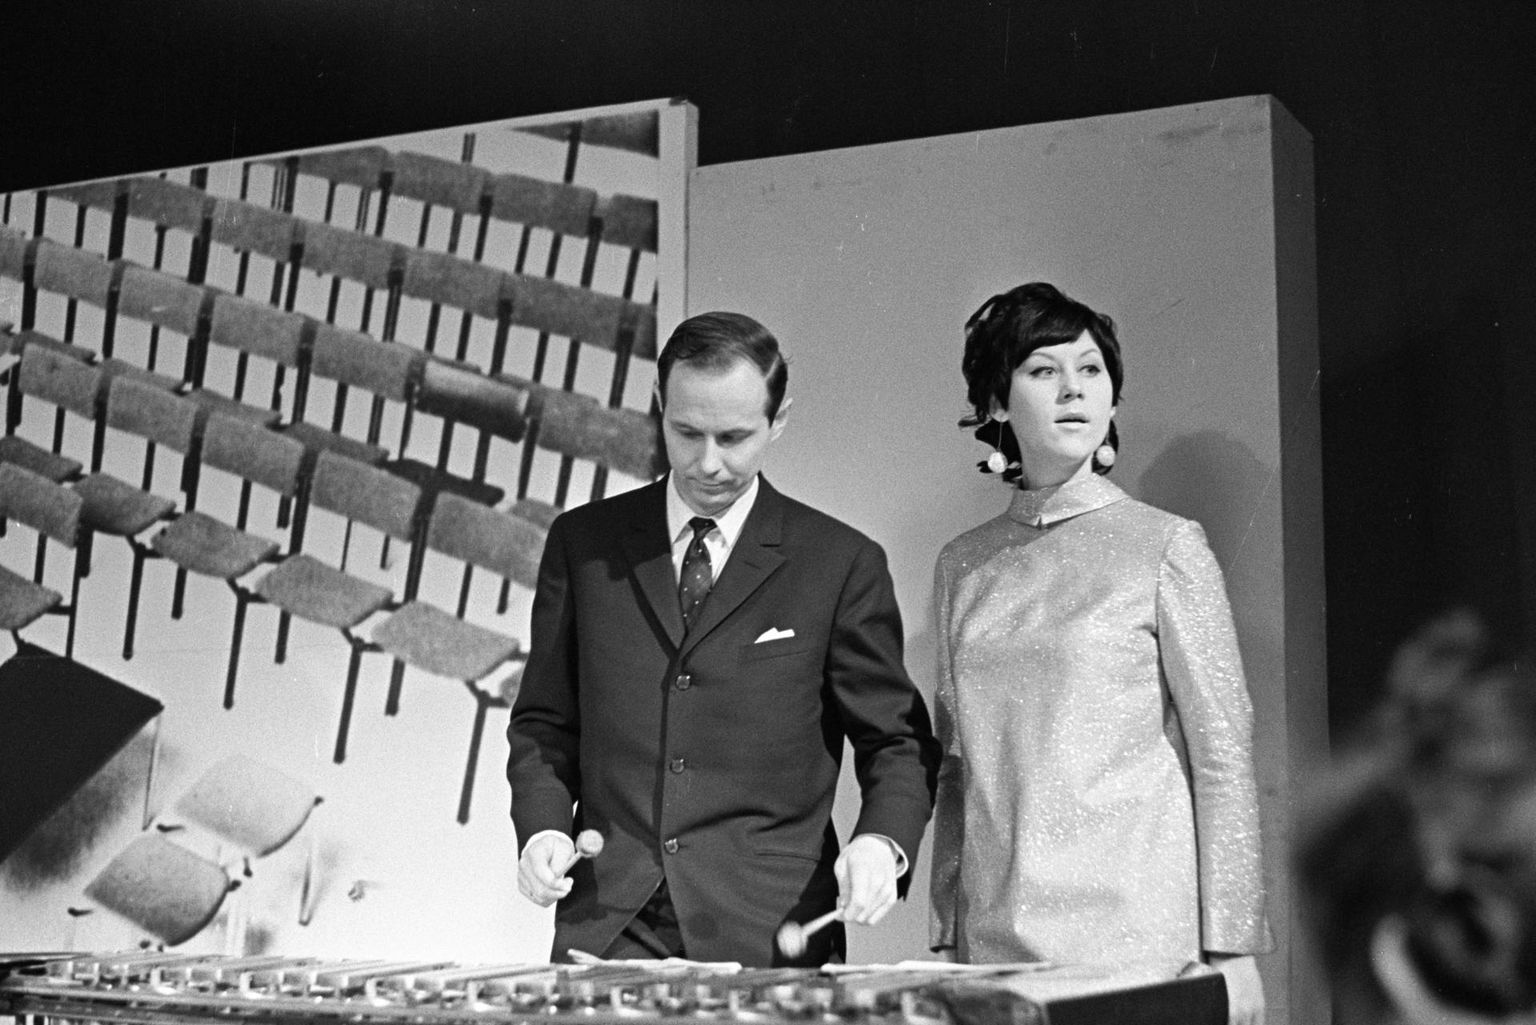 Duettide meister Kalju Terasmaa koos Heidy Tammega populaarses telesaates «Horoskoop» 1969.